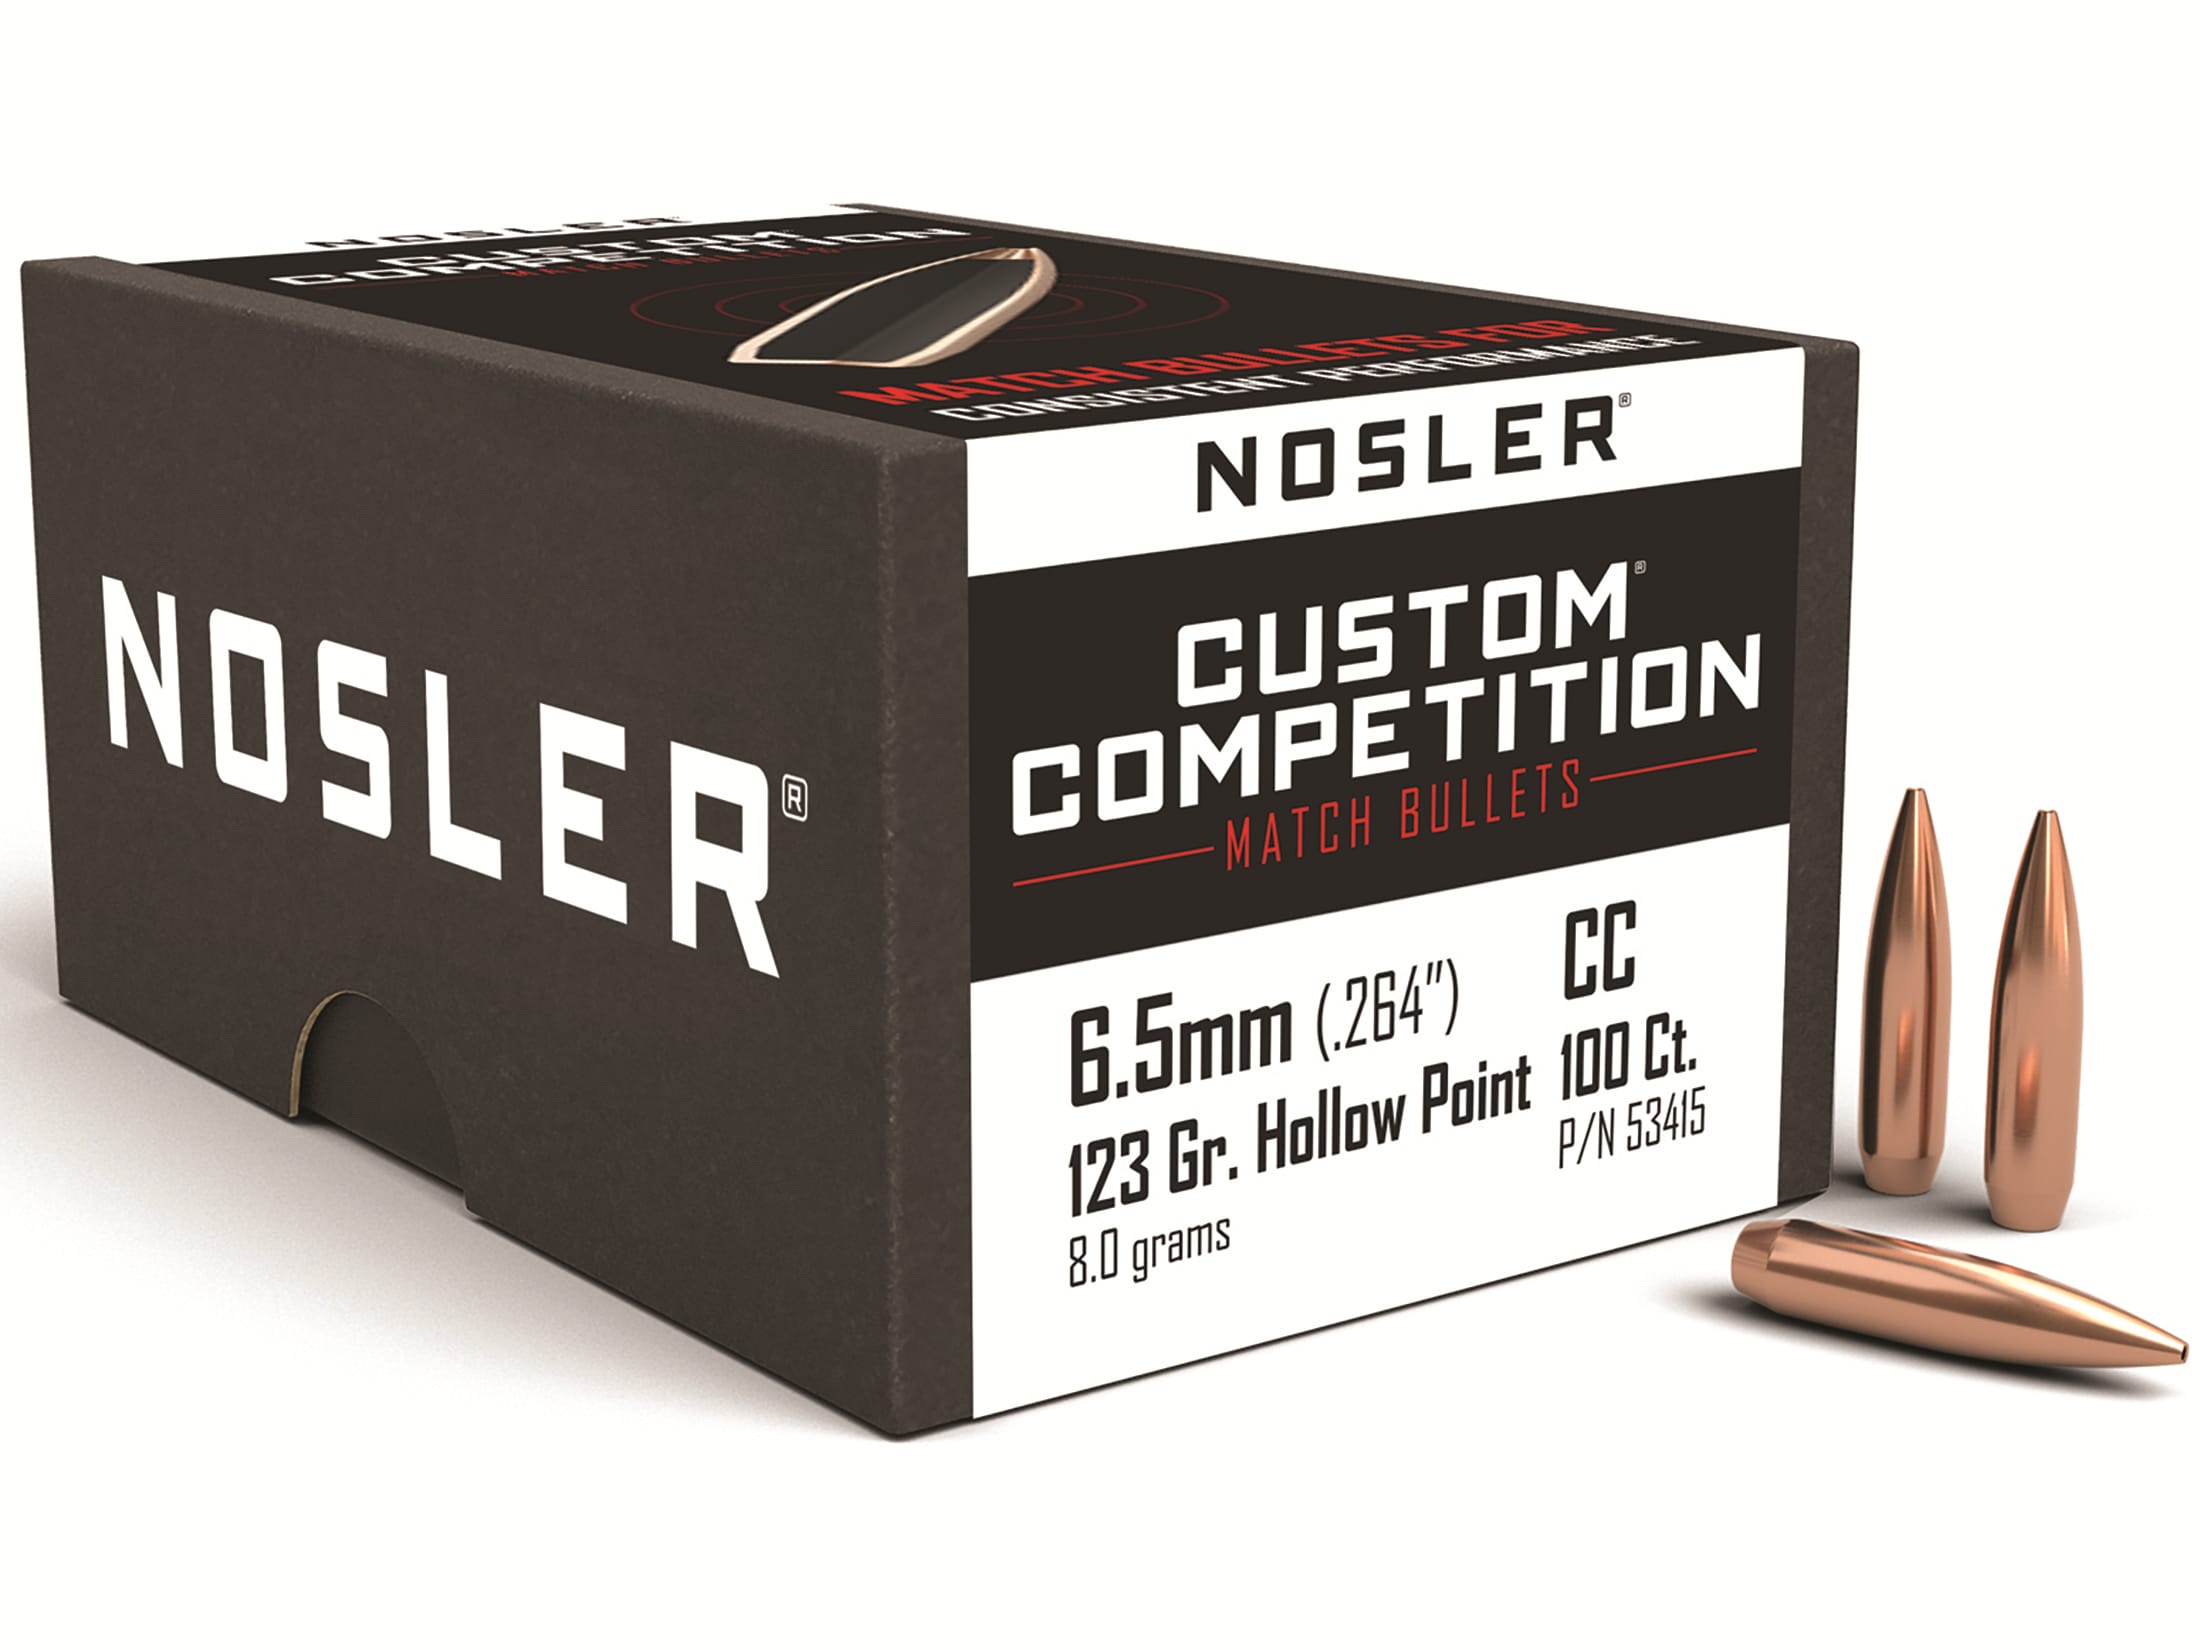 Nosler Custom Competition Bullets 264 Caliber, 6.5mm (264 Diameter) 123 Grain Hollow Point Boat Tail